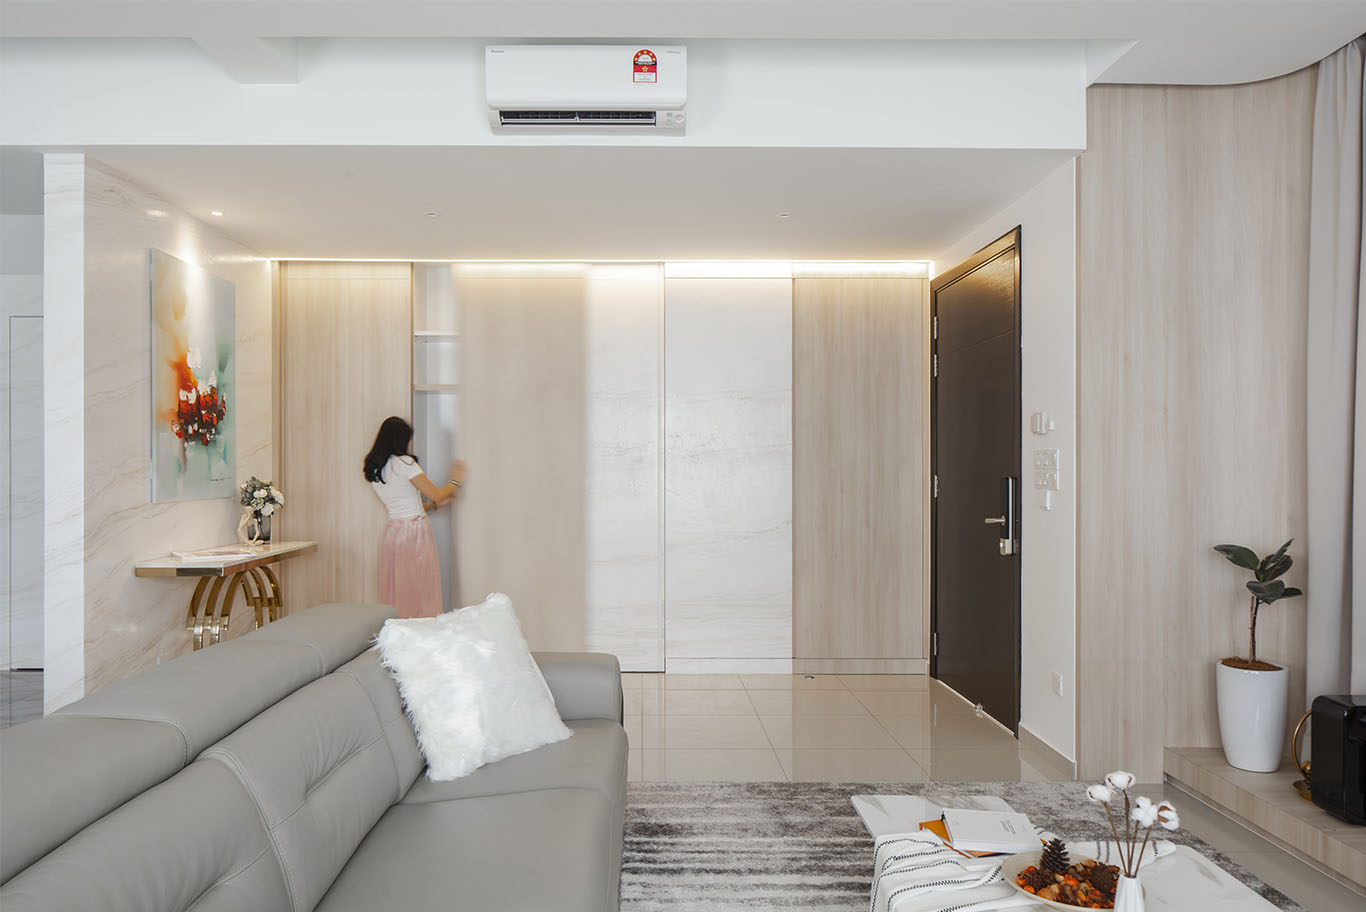 Grande Rhapsody minimalist living room with hidden wall cabinet Mieux interior design